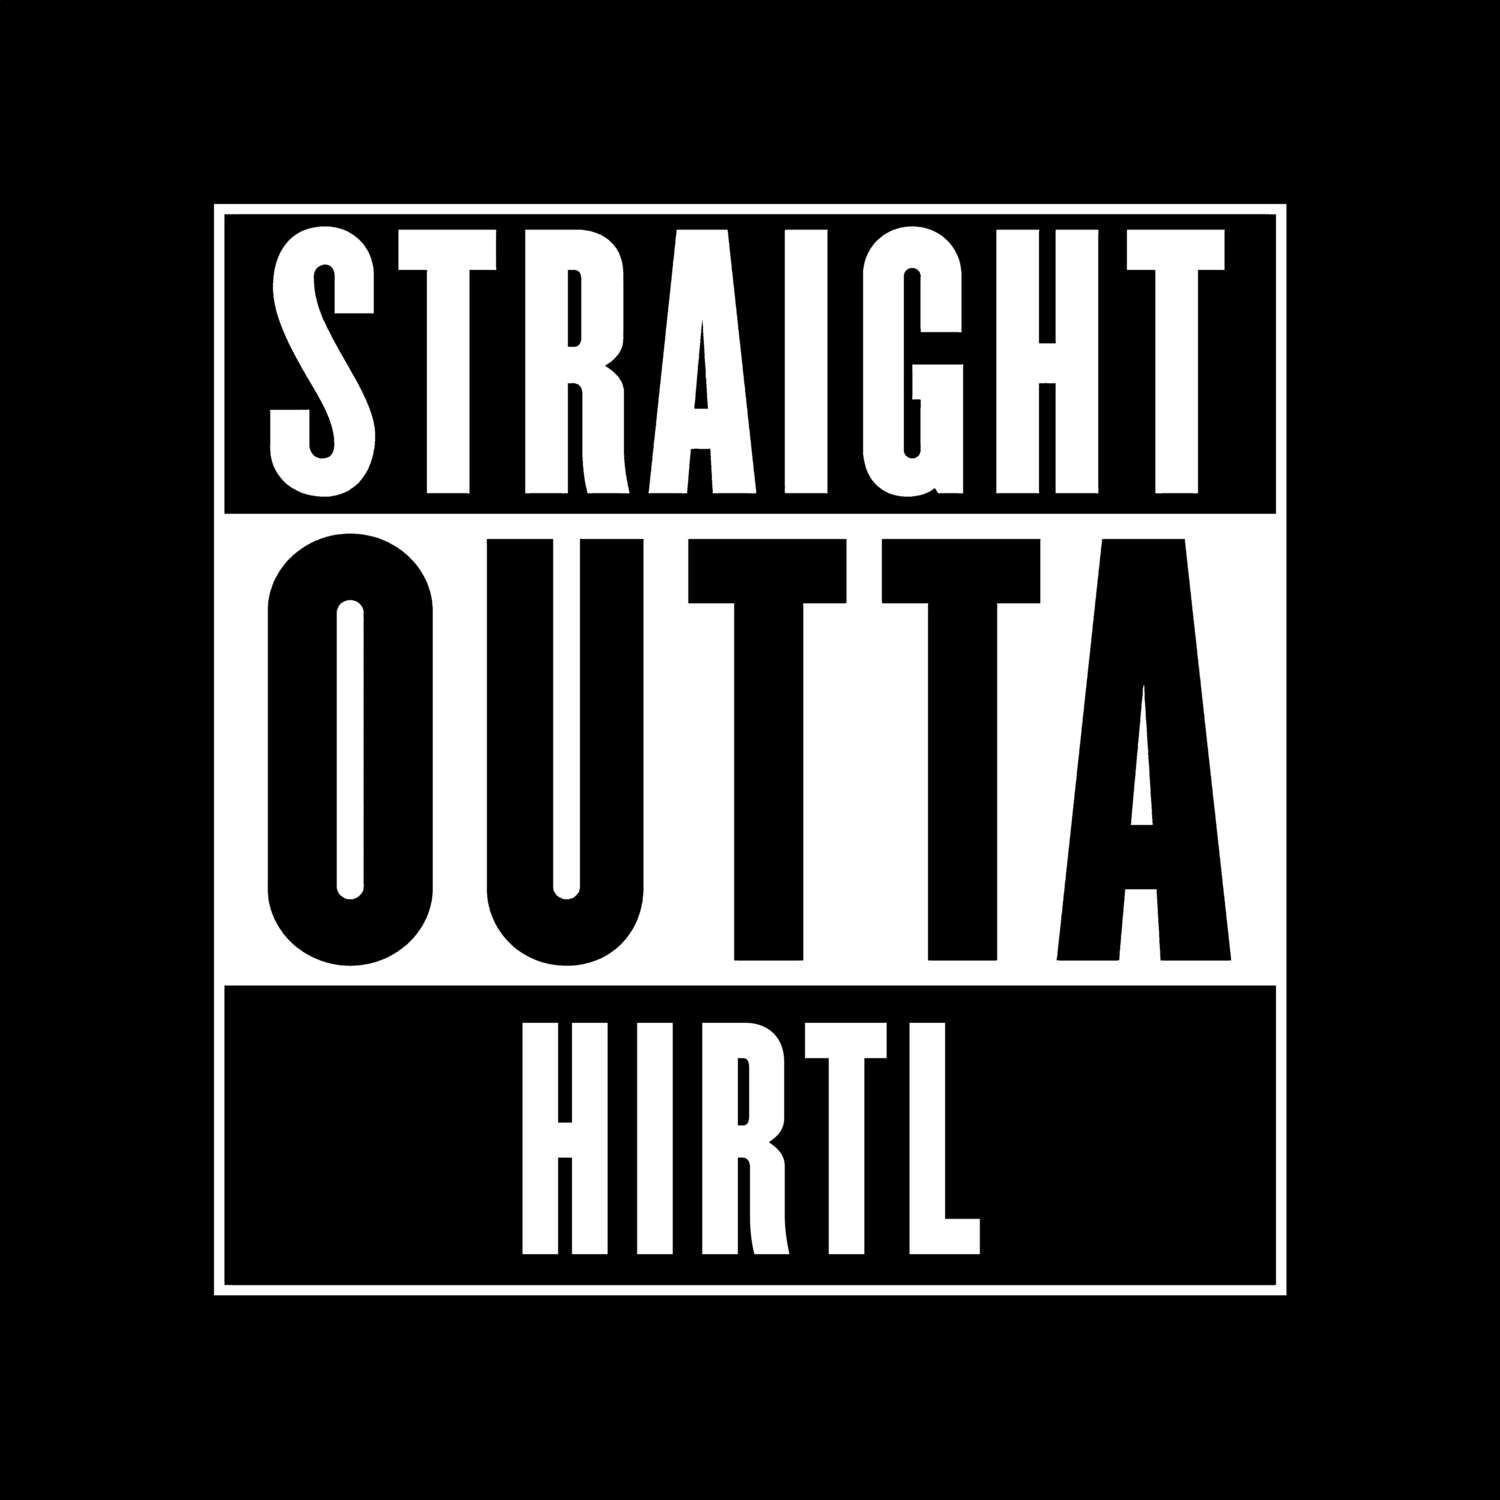 Hirtl T-Shirt »Straight Outta«